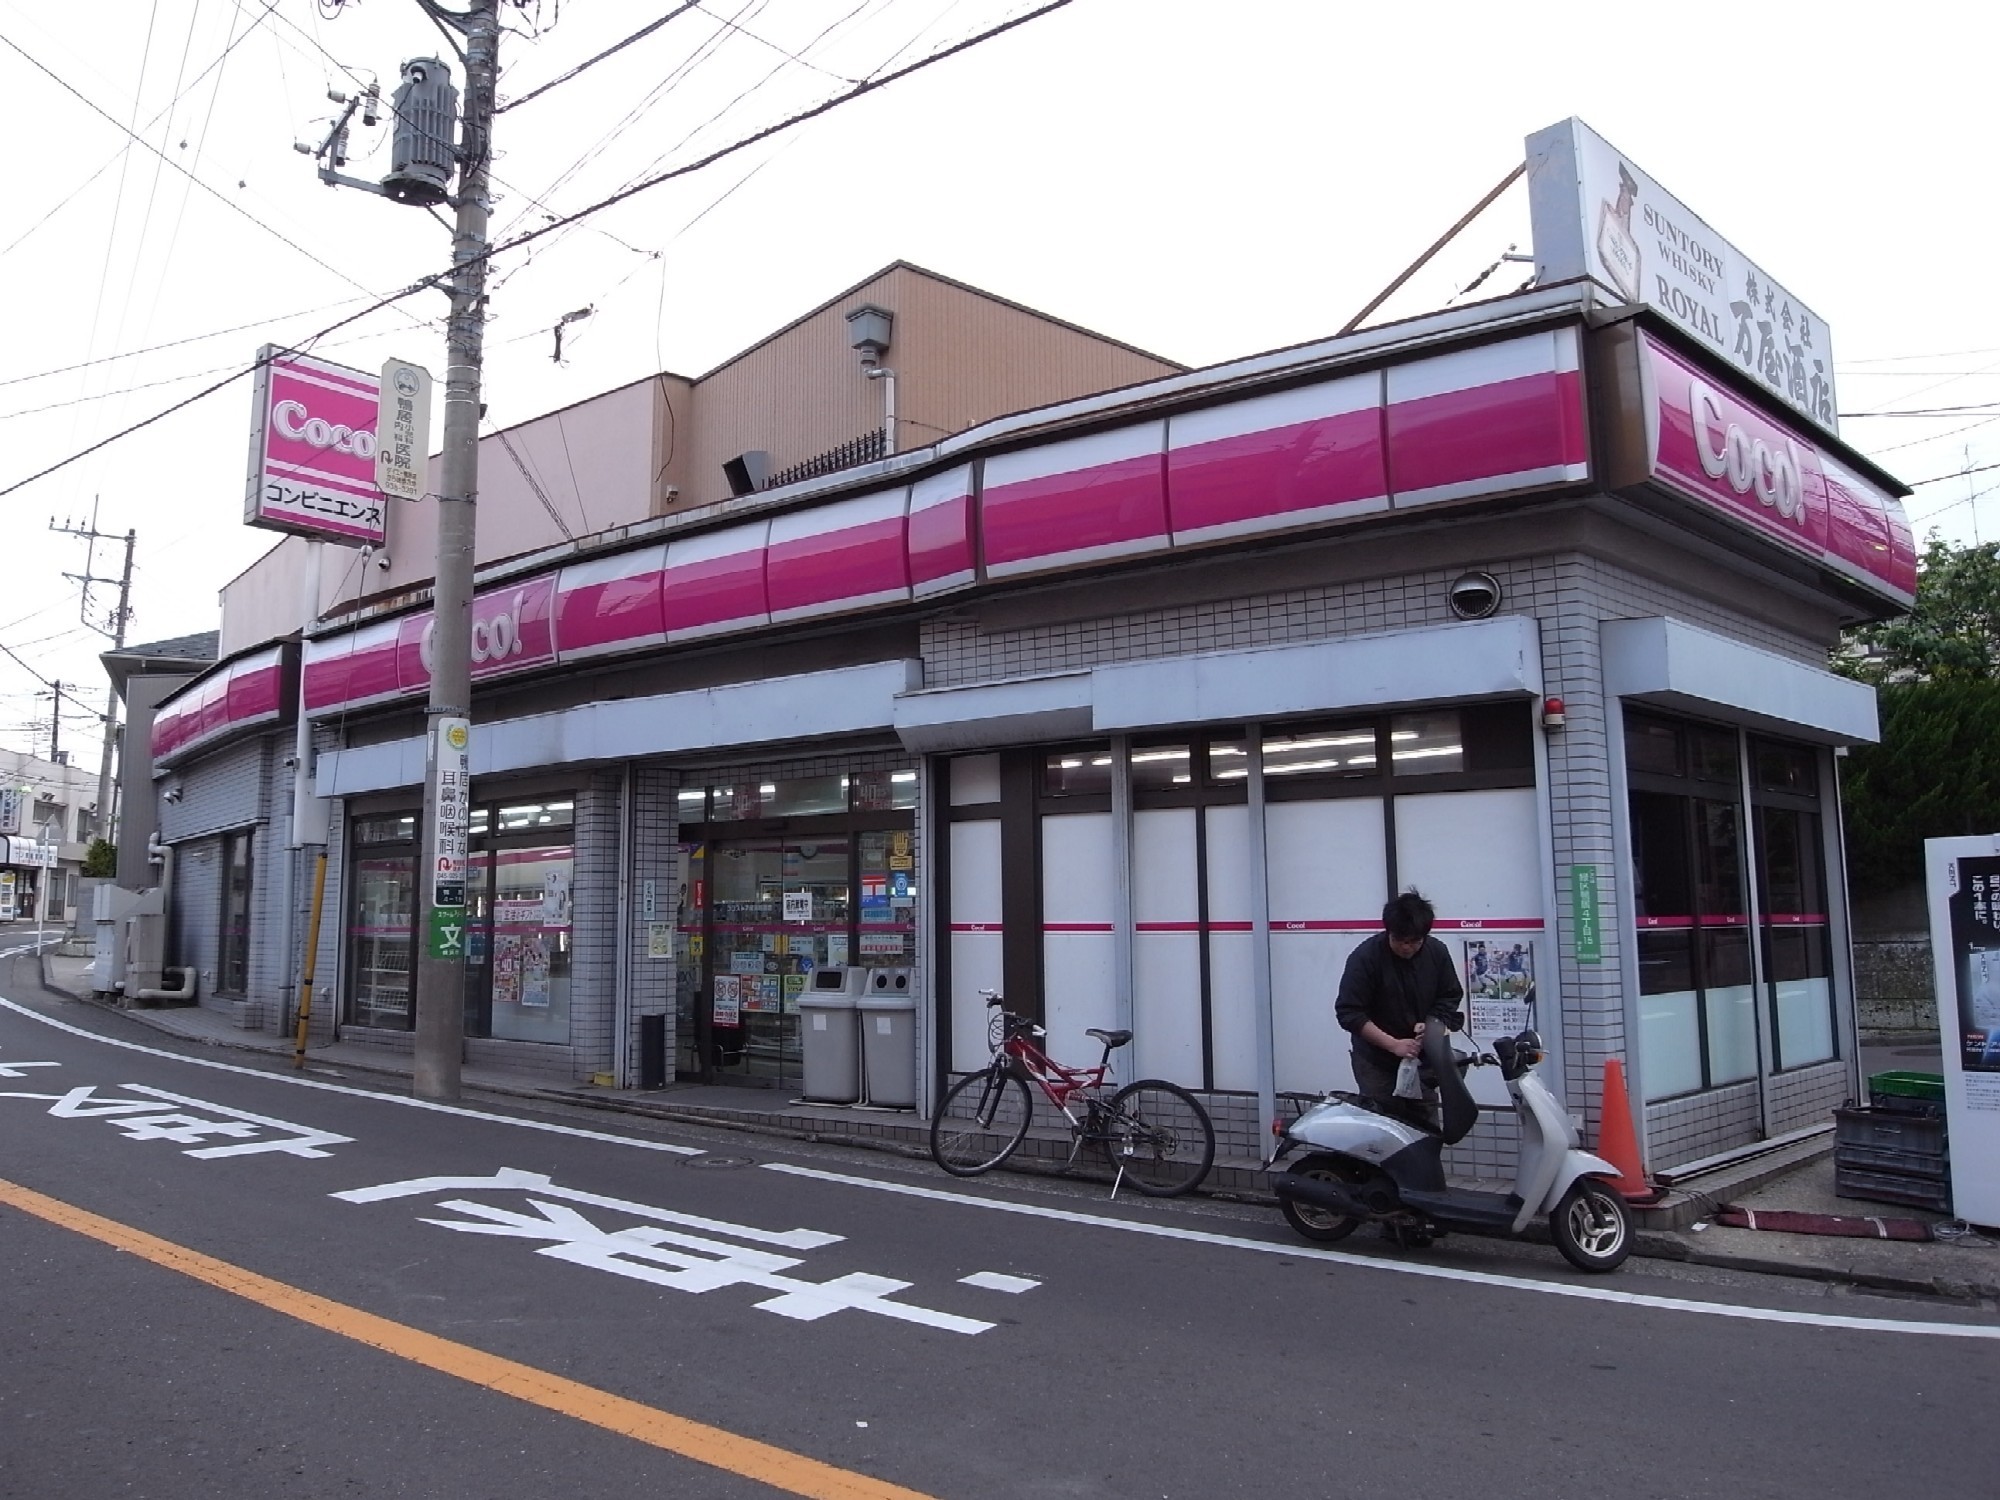 Convenience store. 275m to the Coco store Yokohama lintel store (convenience store)